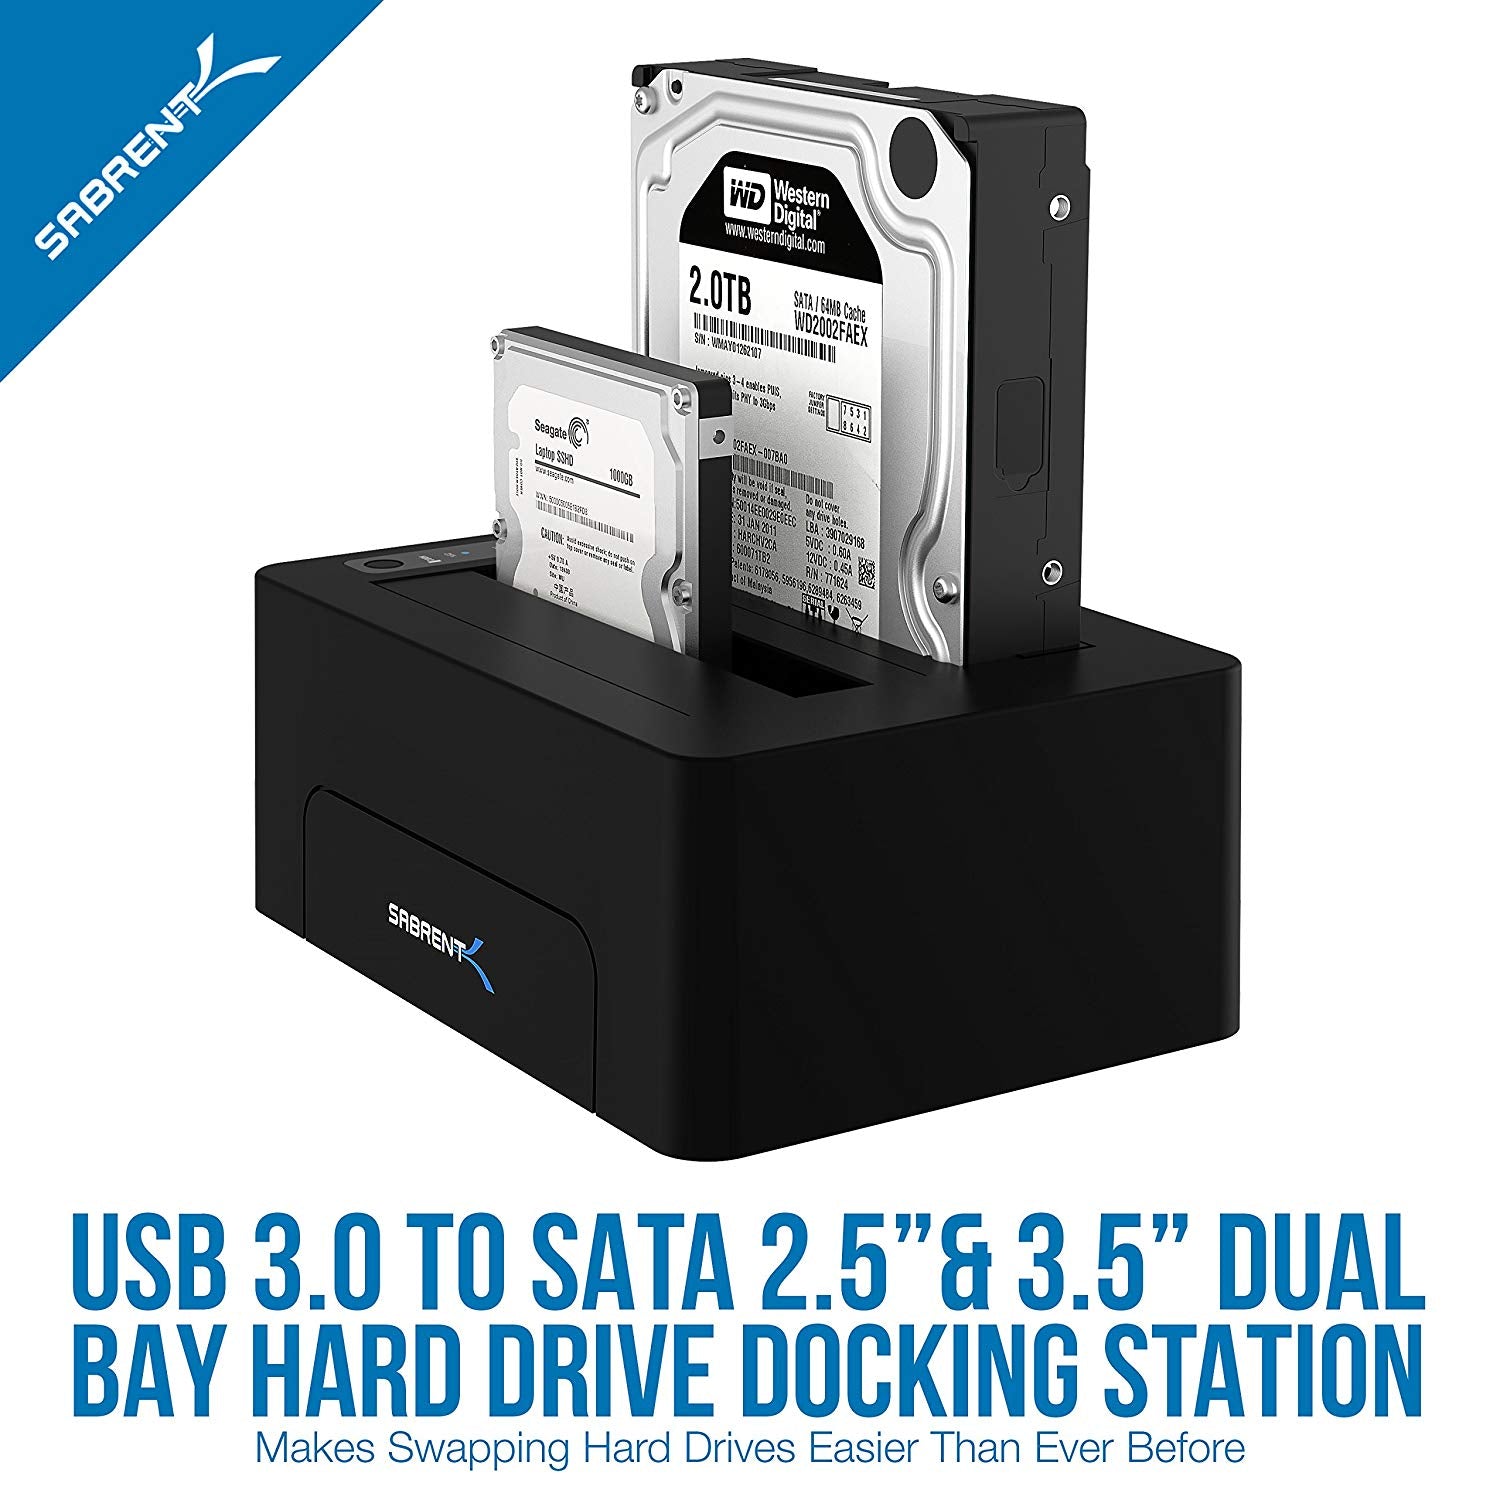 USB 3.0 to Dual Bay Hard Drive Docking Station 2.5" or 3.5" H - Sabrent